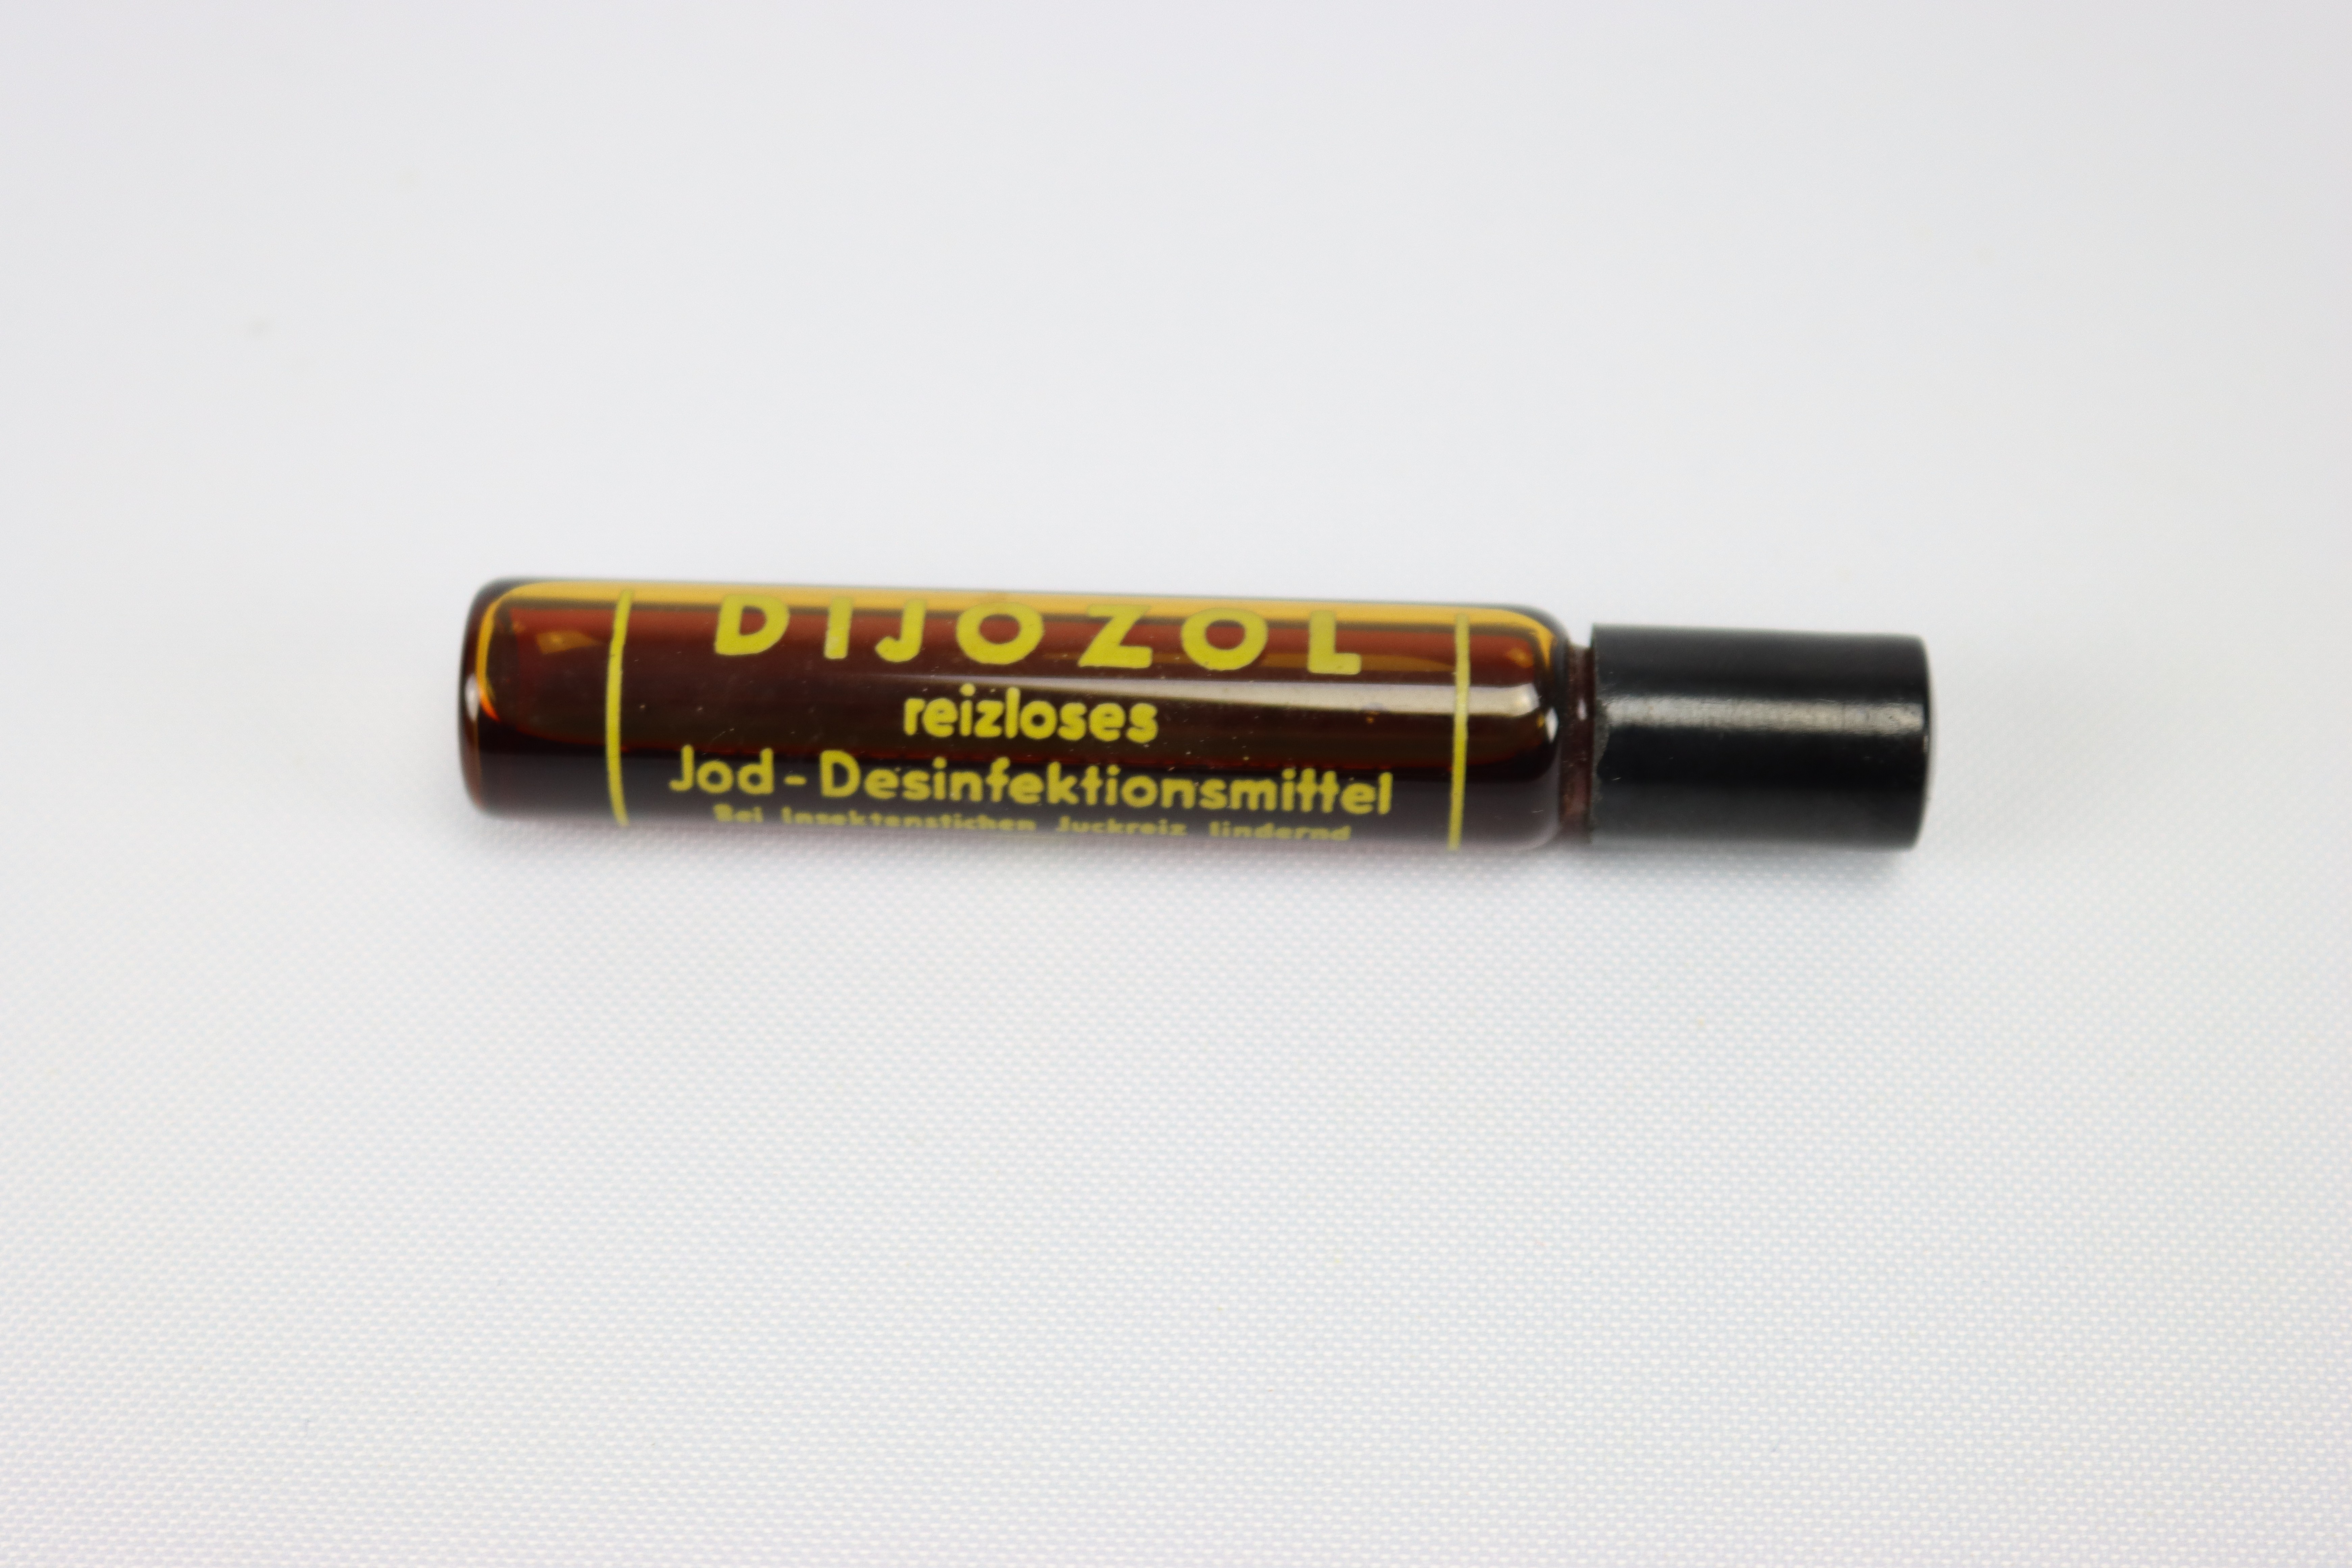 Dijozol reizloses Jod-Desinfektionsmittel - Aufdruck Bezeichnung (Krankenhausmuseum Bielefeld e.V. CC BY-NC-SA)